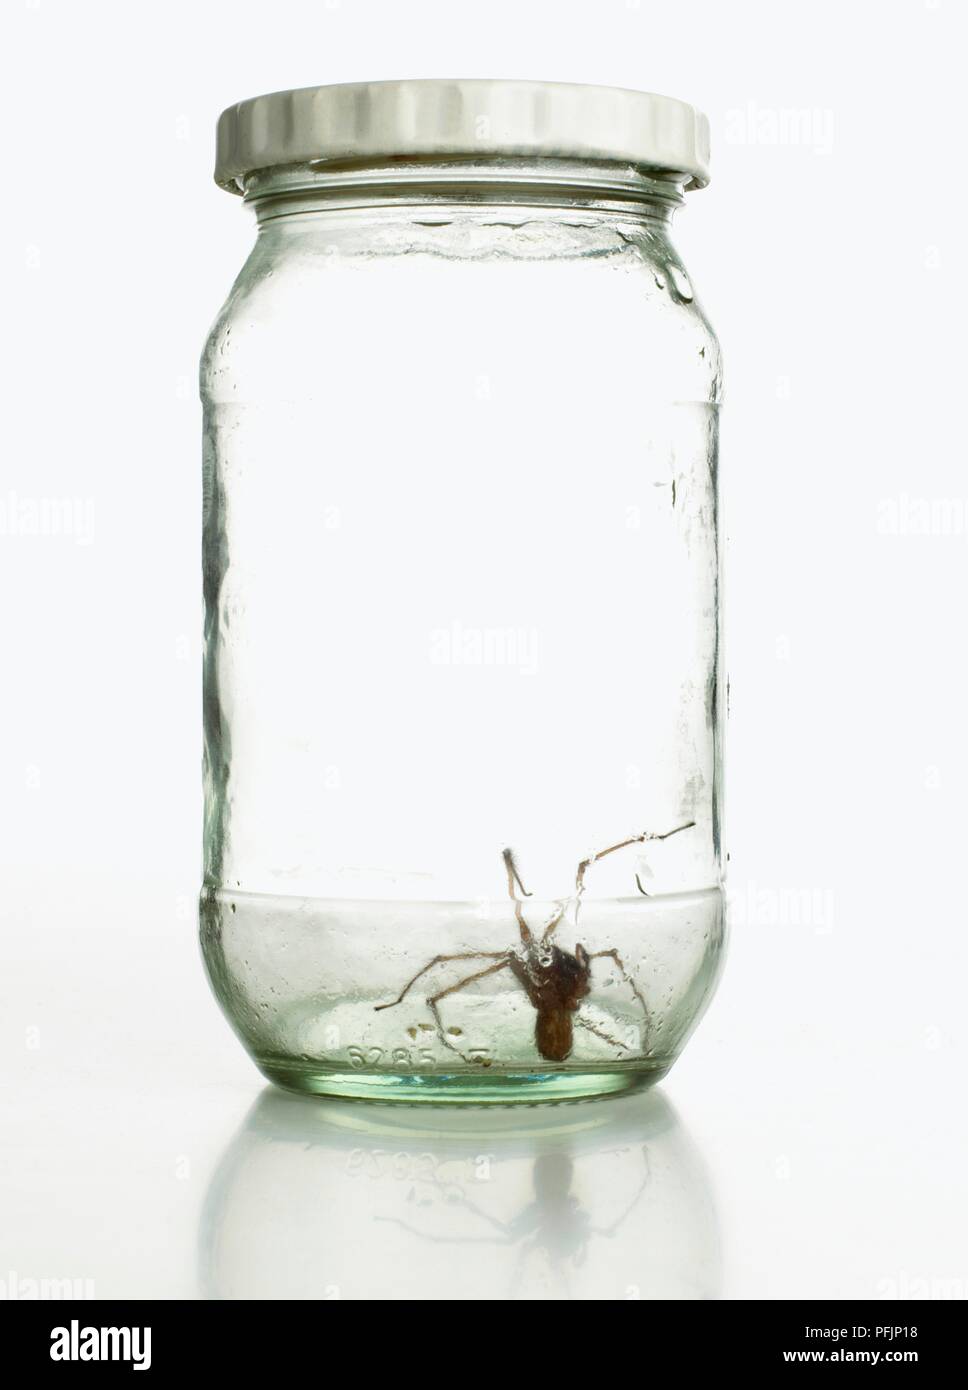 Spider in glass jar Stock Photo